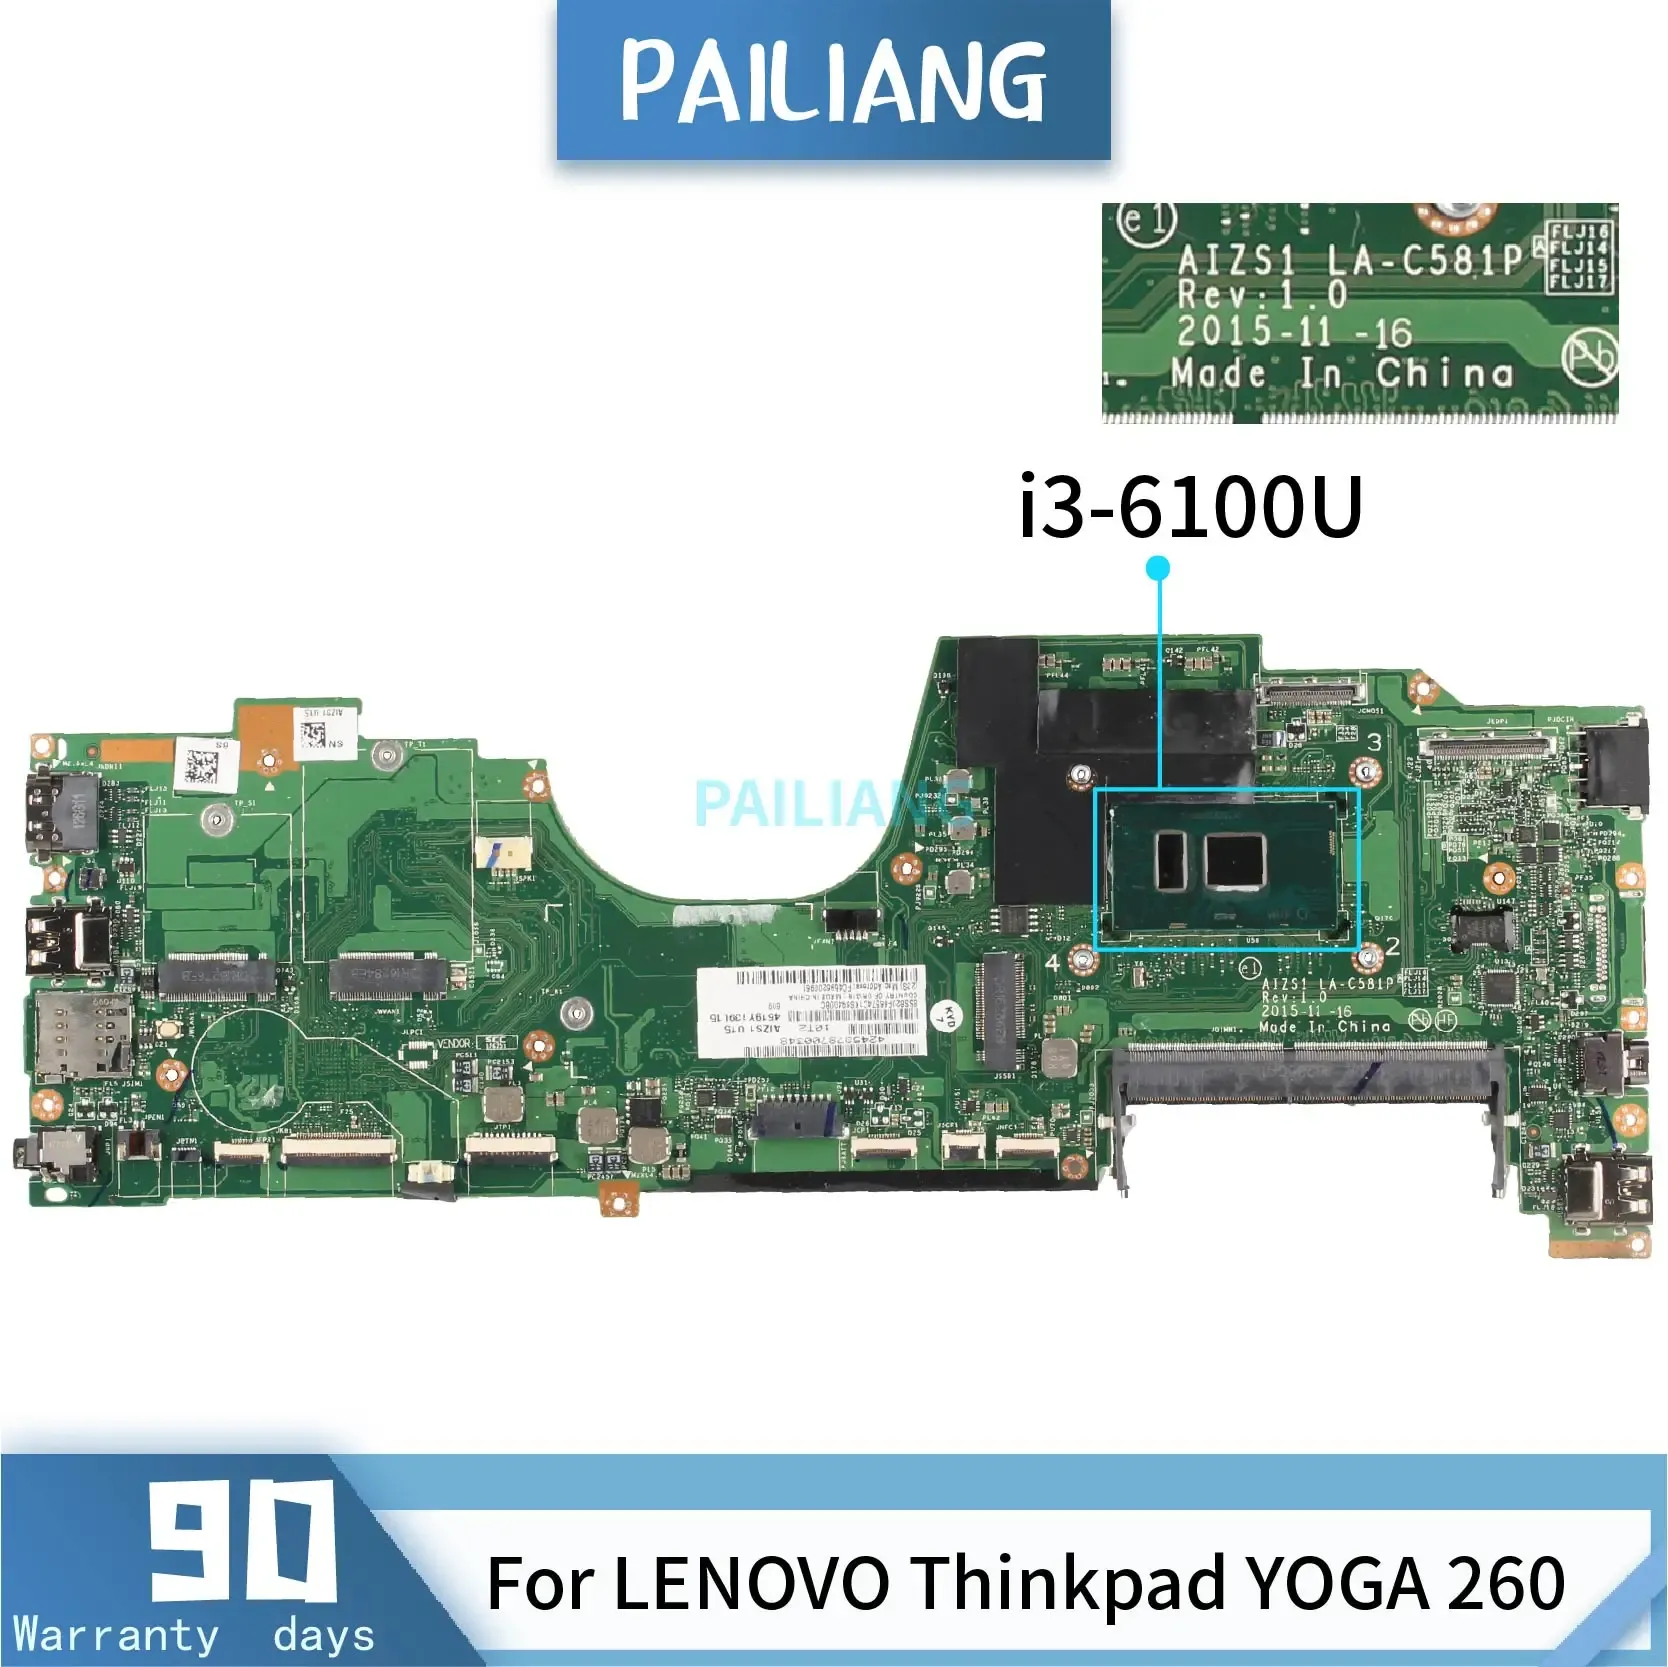 RAMs LAC581P For LENOVO Thinkpad YOGA 260 Laptop Motherboard AIZS1 SR2EU i36100U Notebook Mainboard Tested DDR3